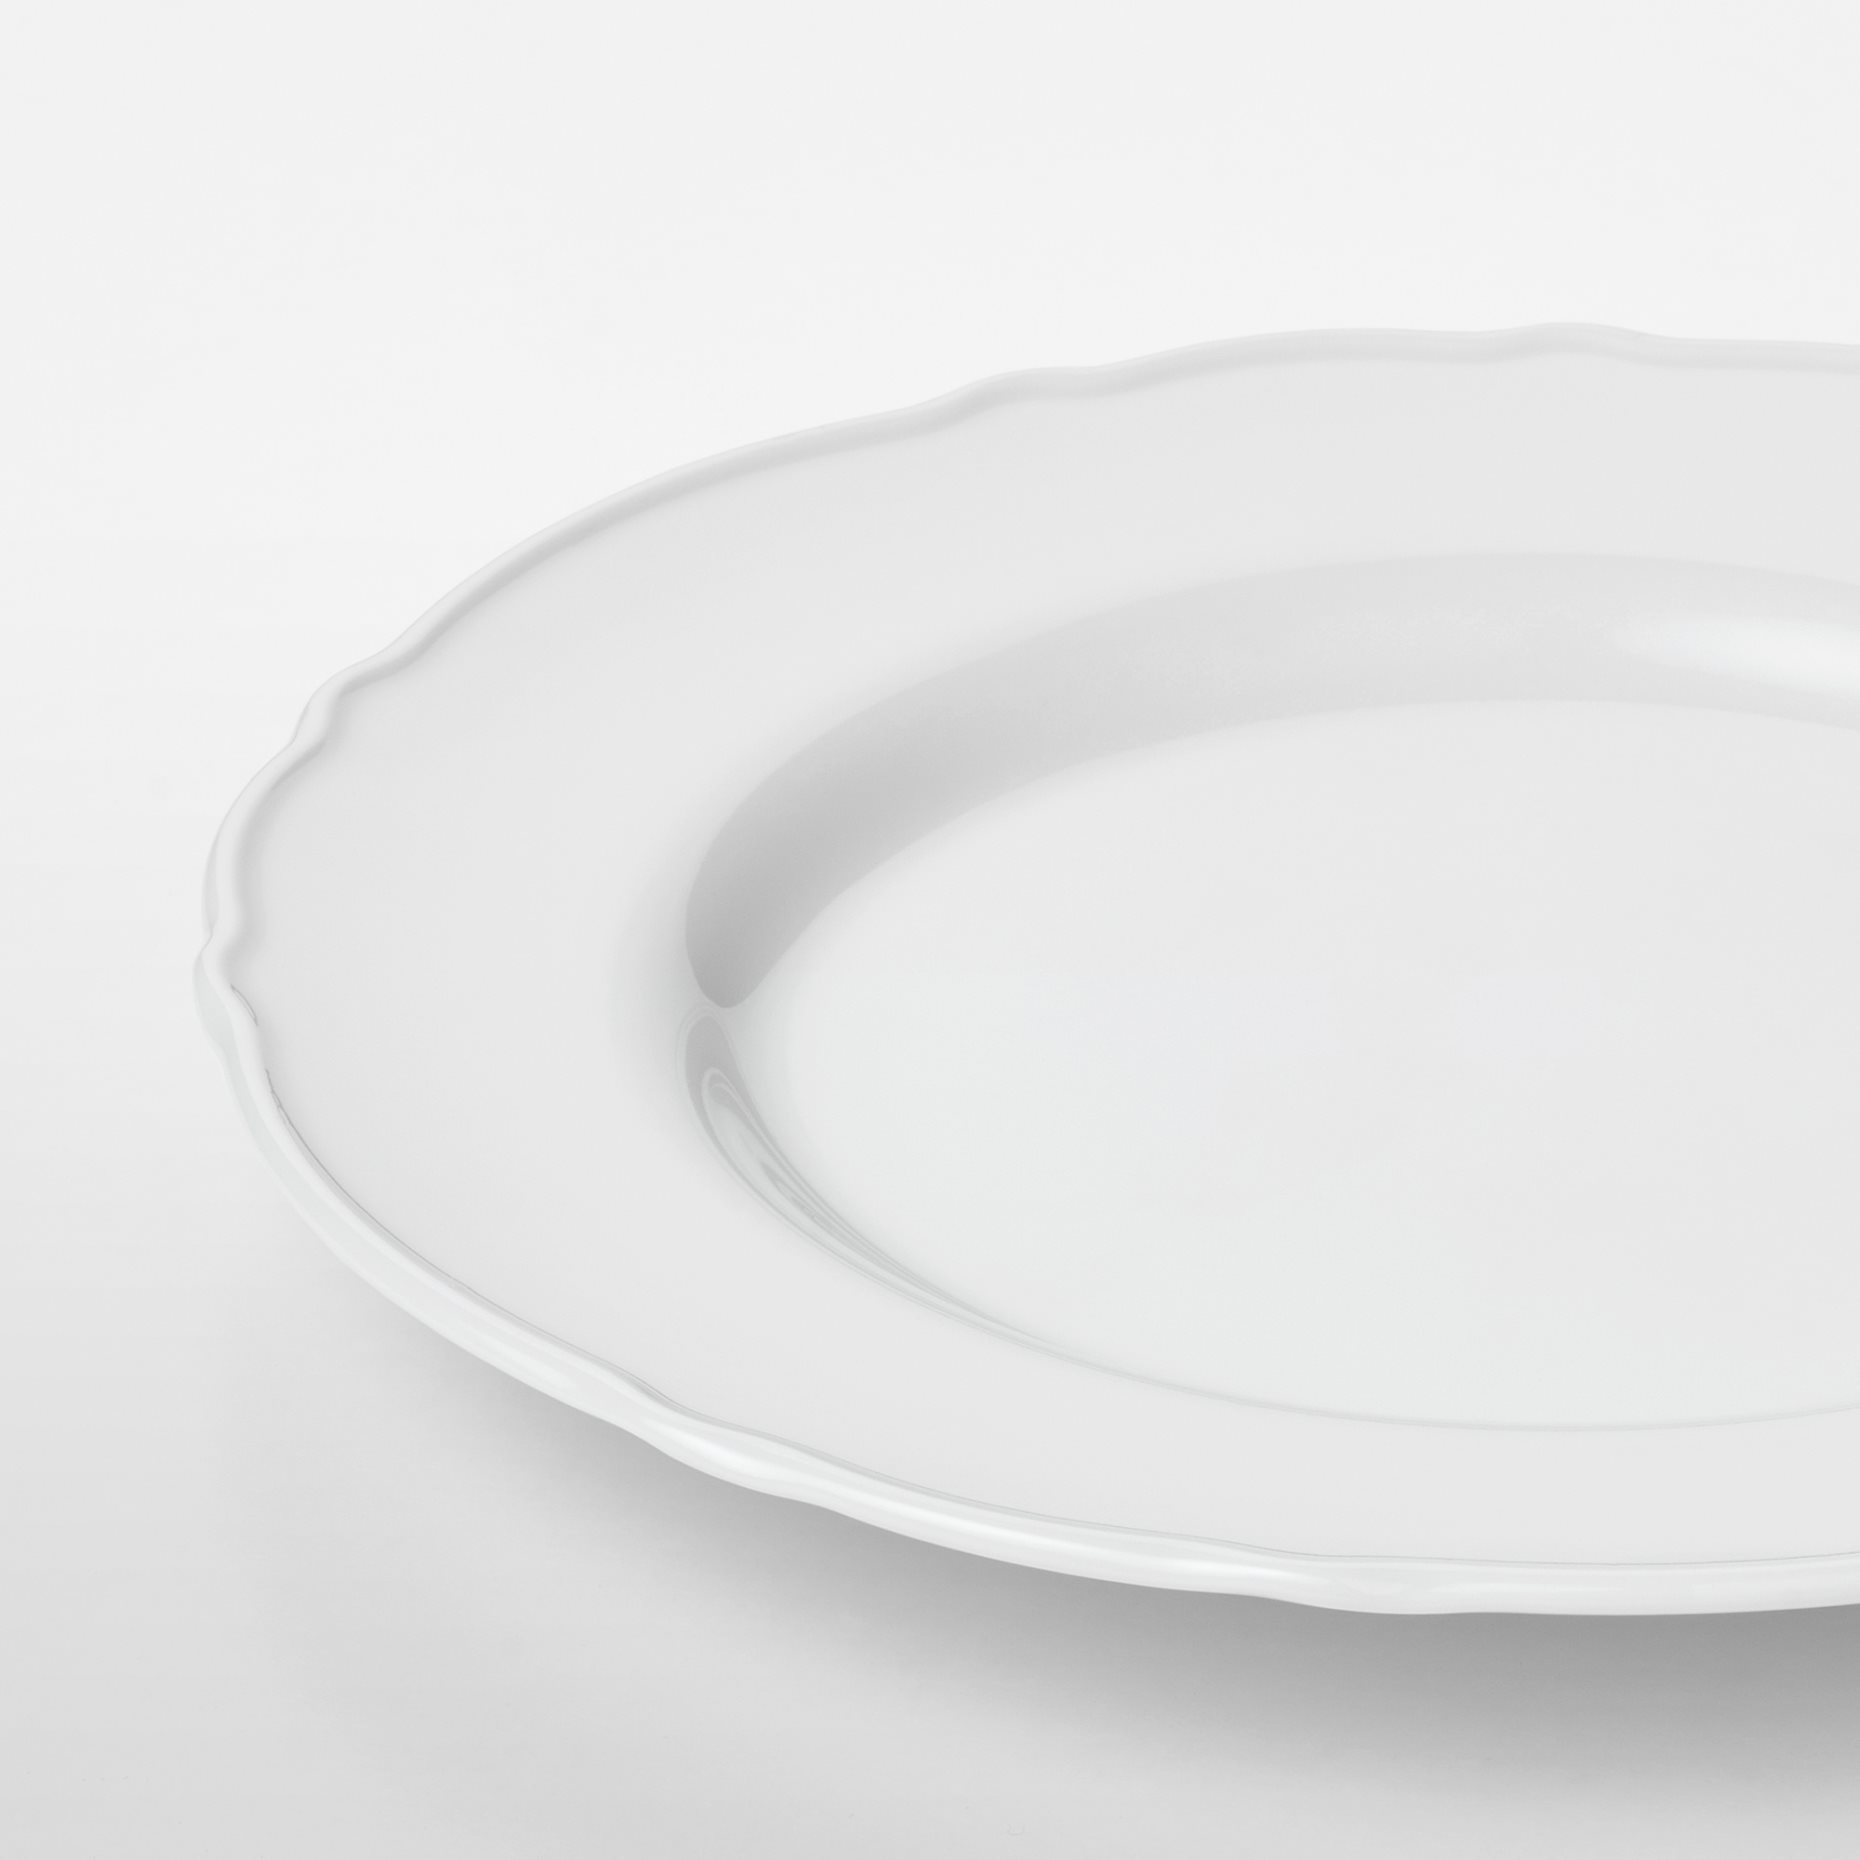 UPPLAGA, plate, 104.247.01